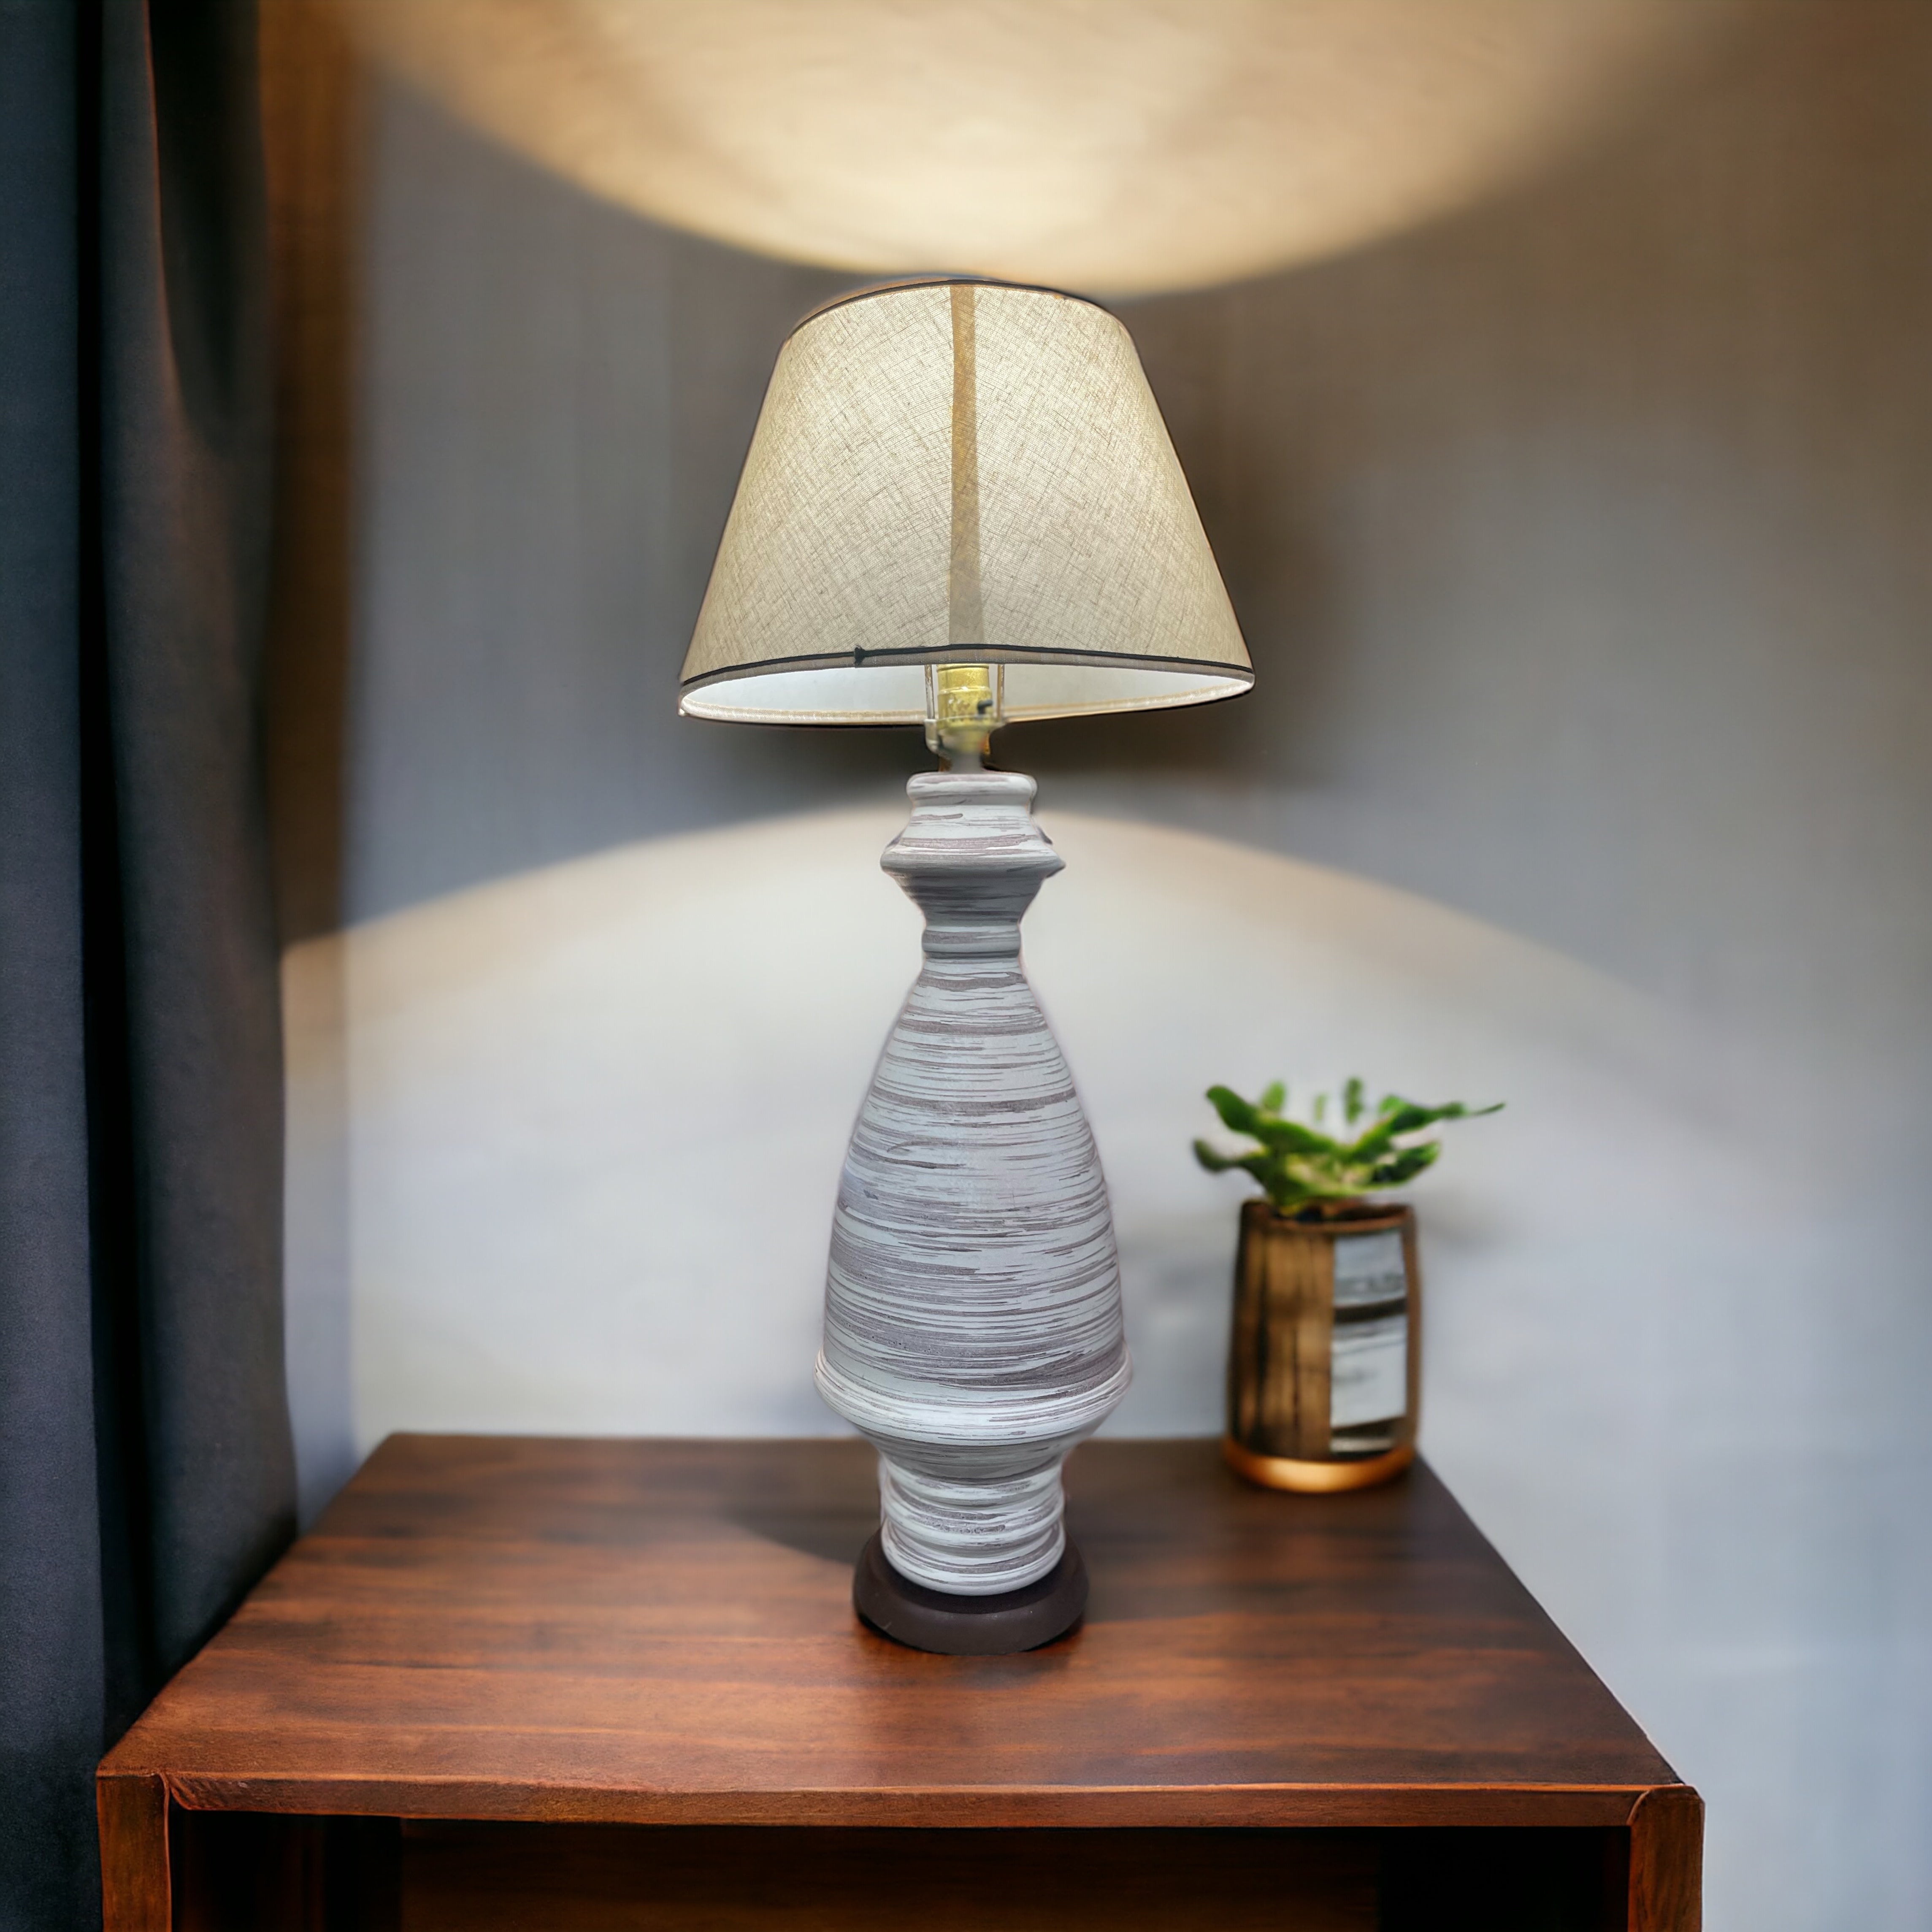 Lovely tall ceramic mid century table lamp